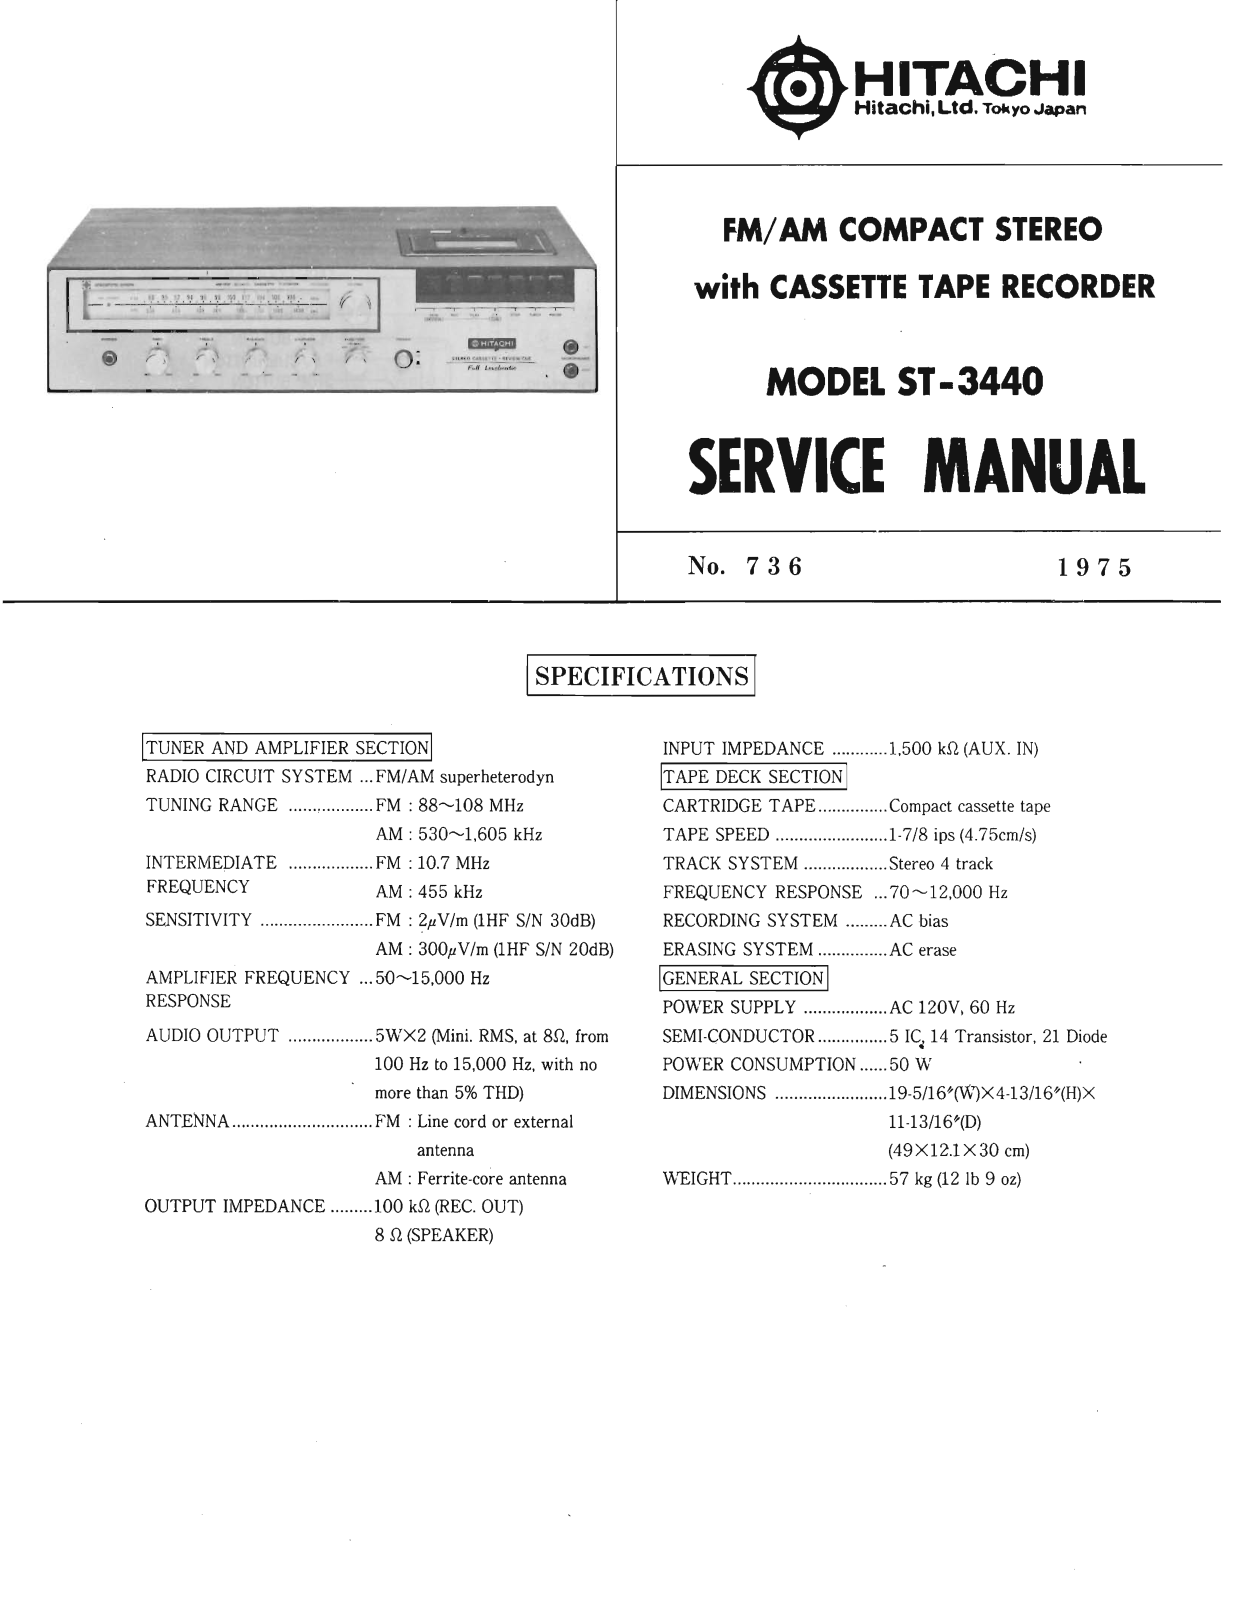 Hitachi ST-3440 Service Manual